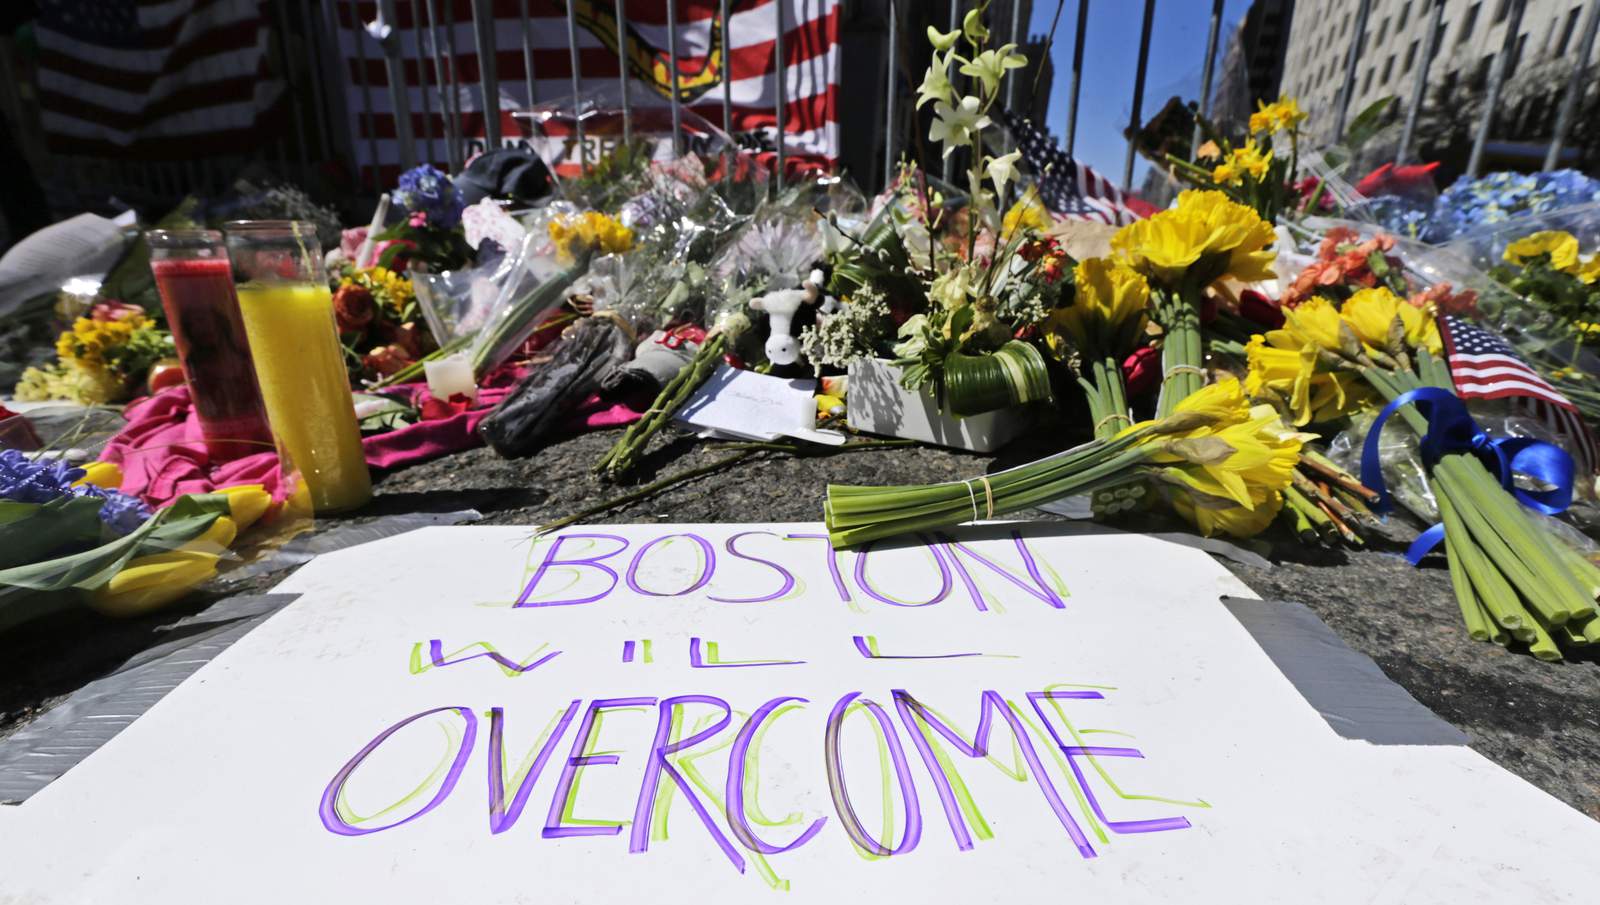 Prospect of 2nd Boston Marathon bomber trial brings anguish